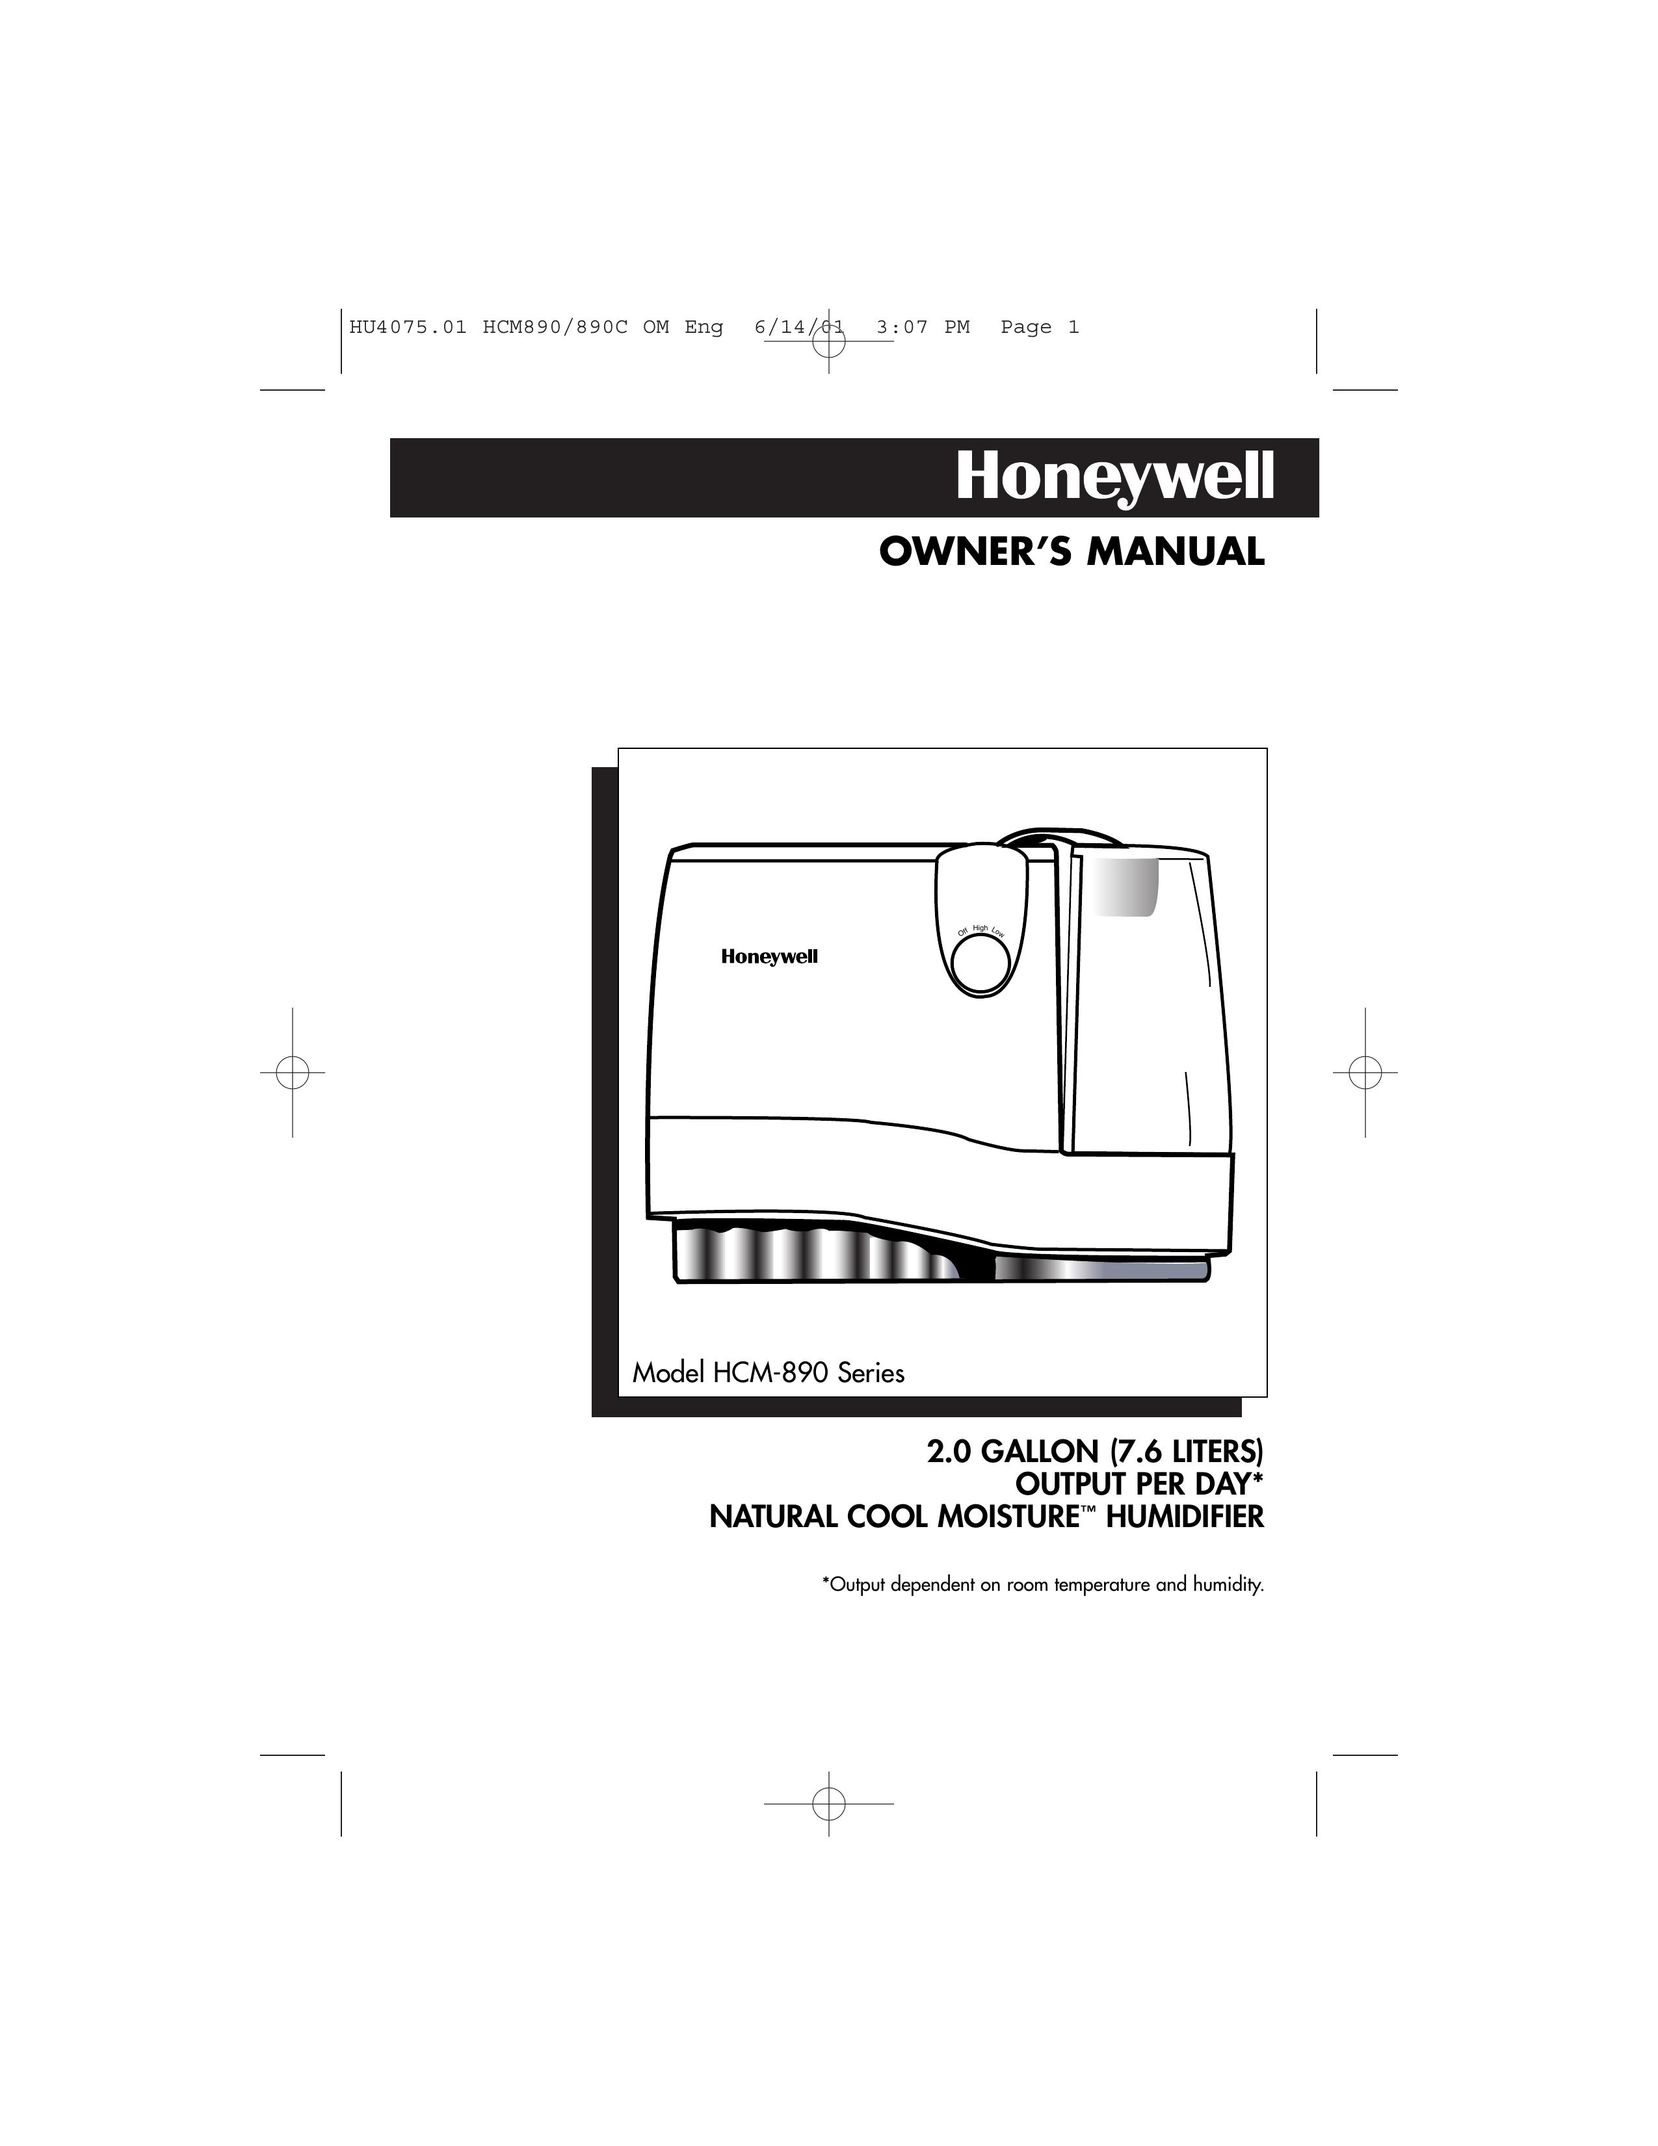 Honeywell HCM-890 Humidifier User Manual